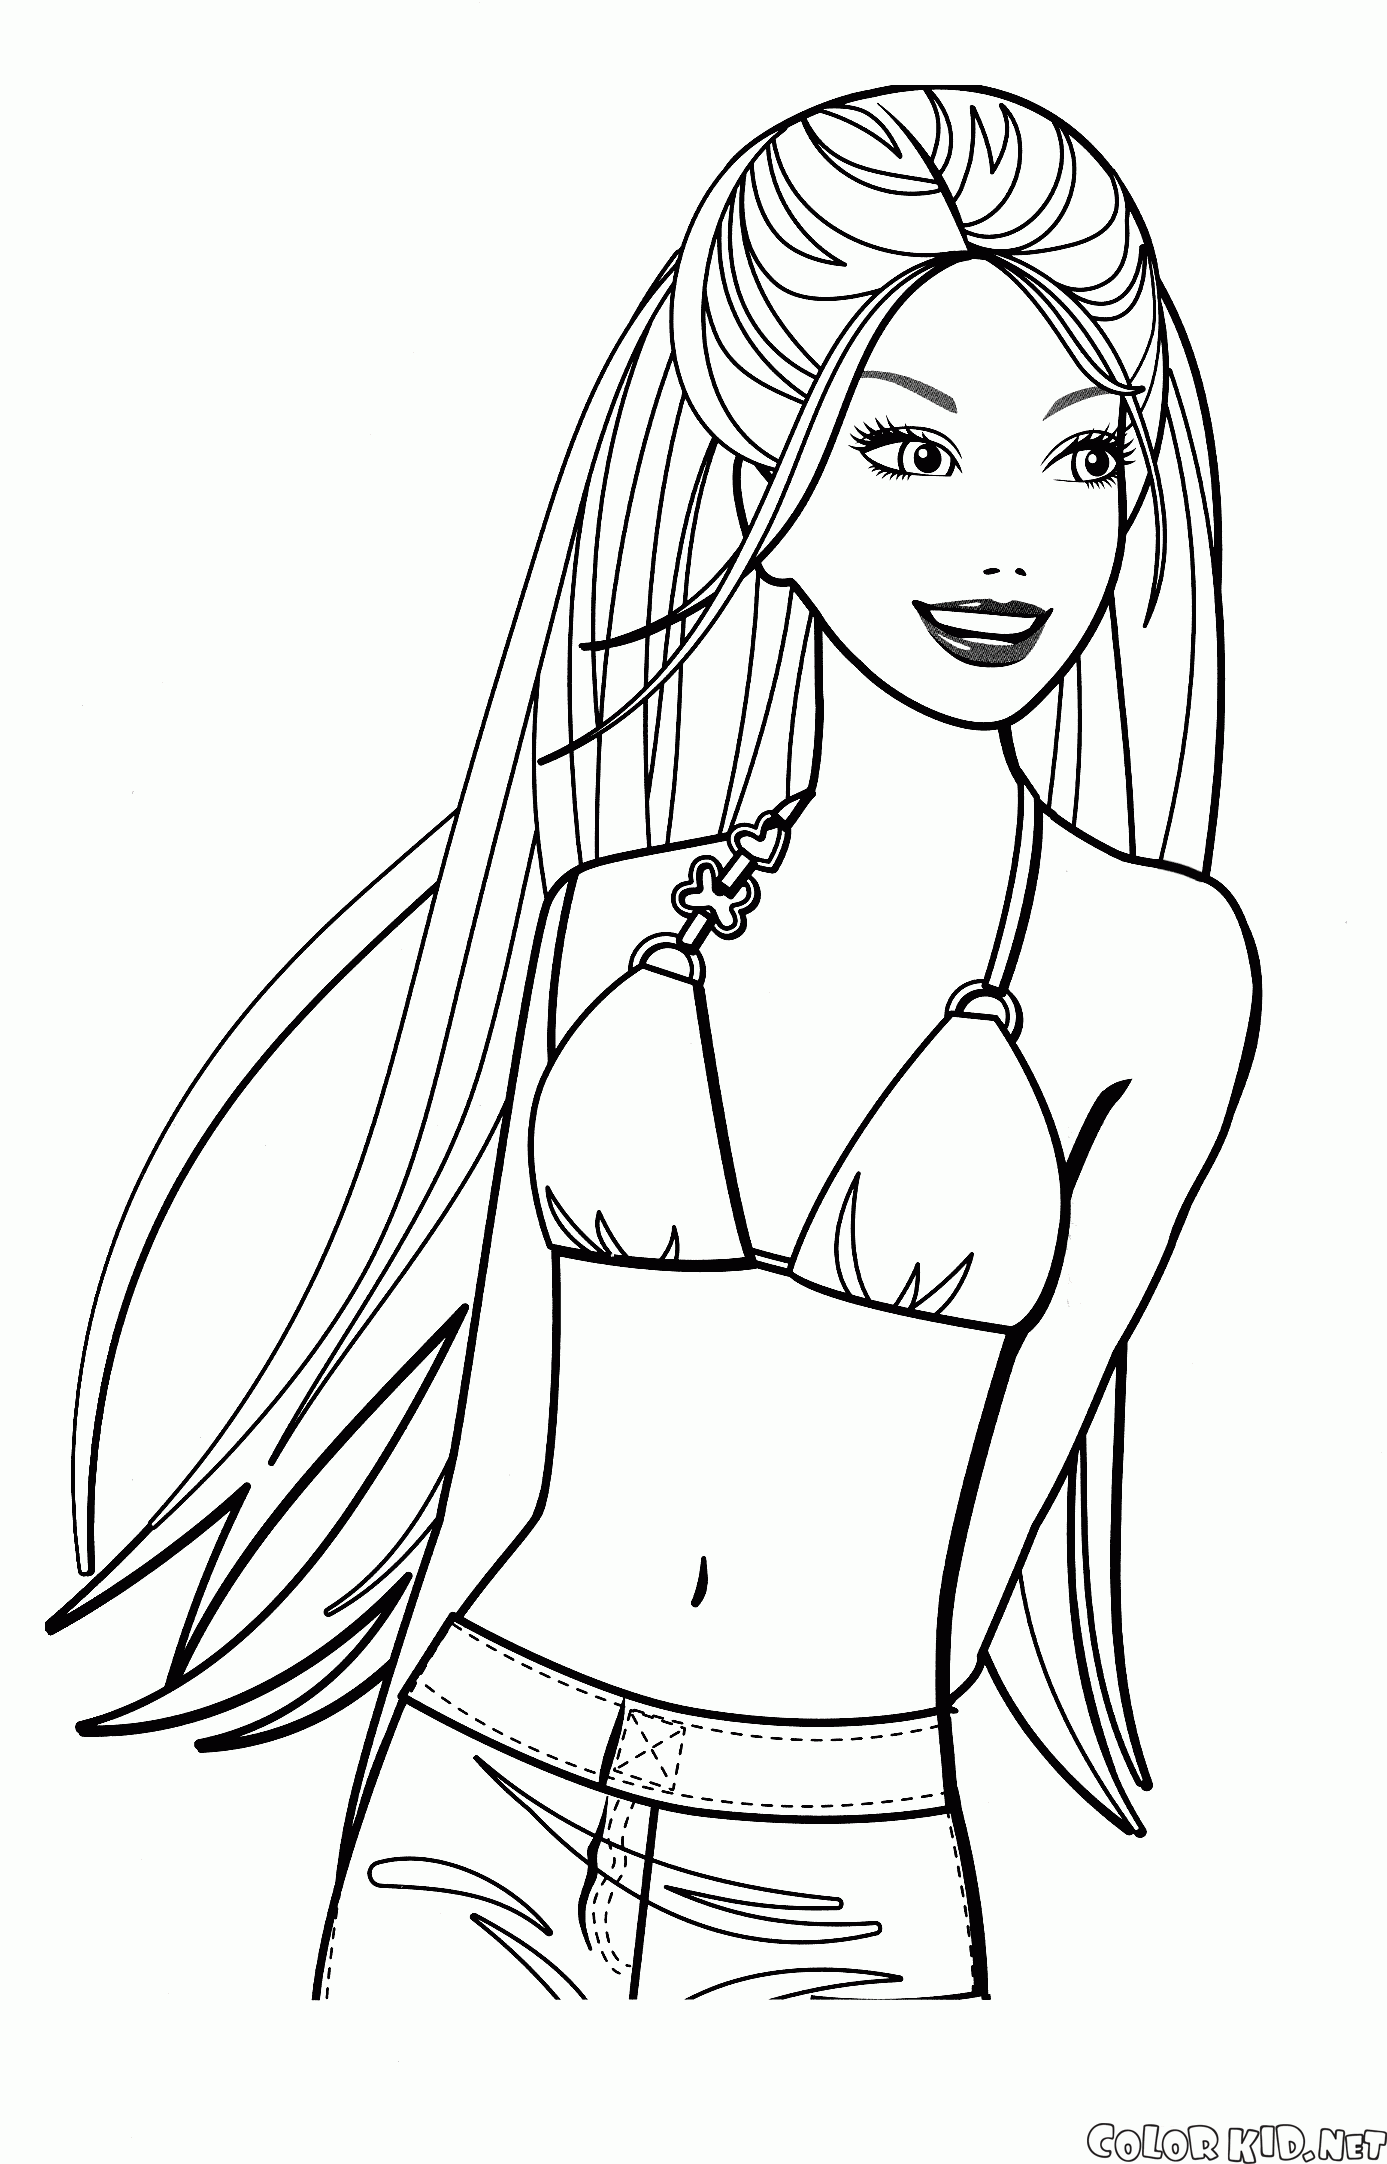 Barbie in a bathing suit